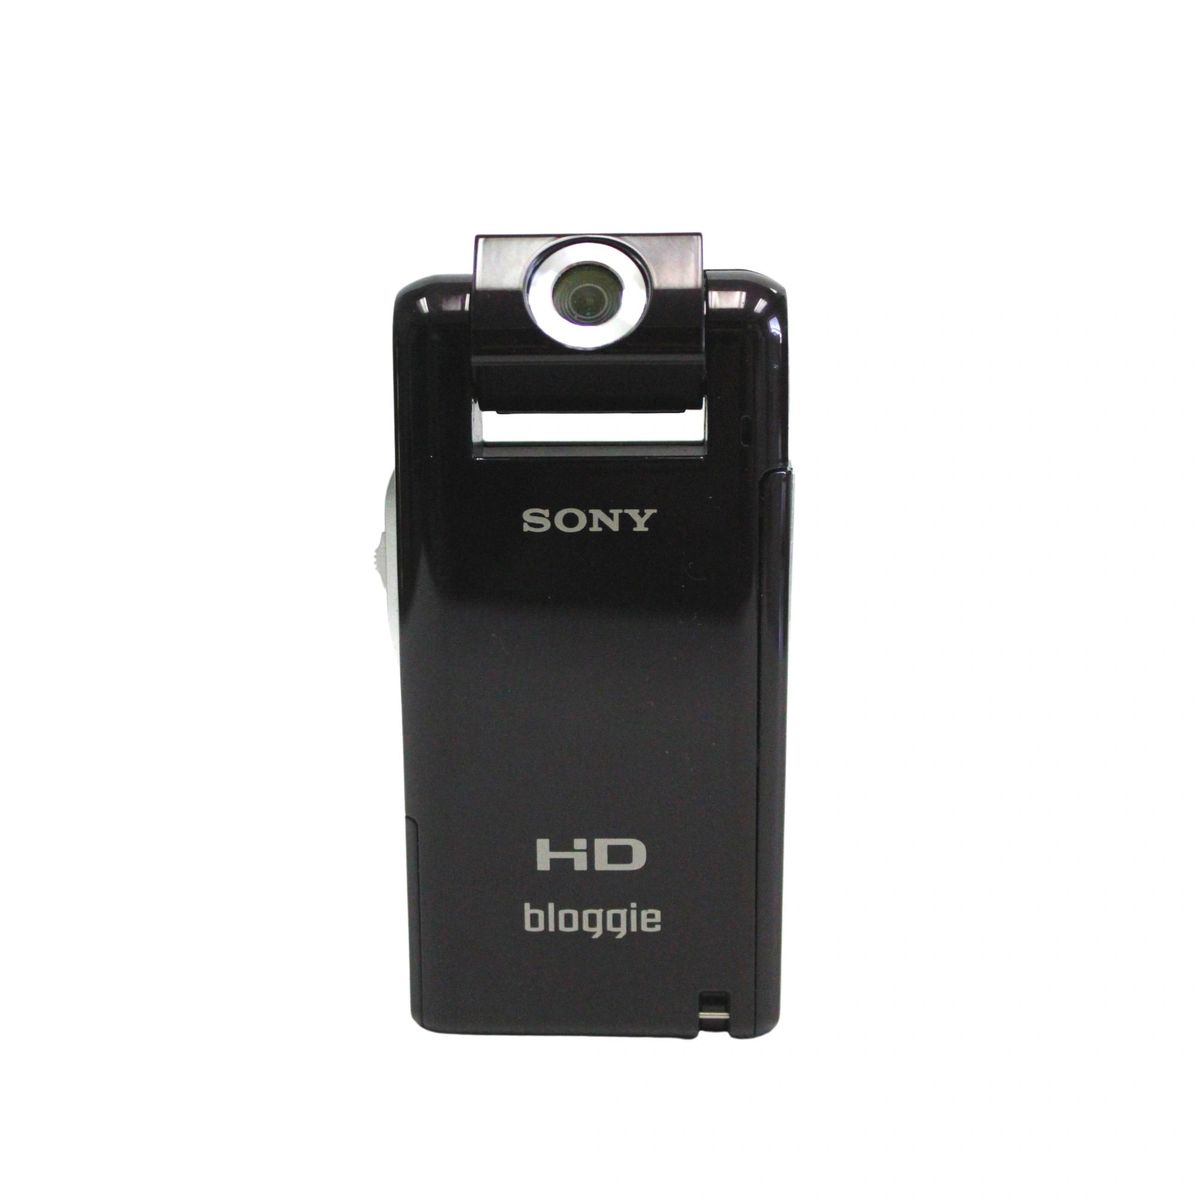 SONY Bloggie HD Video Camera w/ Charger + 4GB Memory Stick